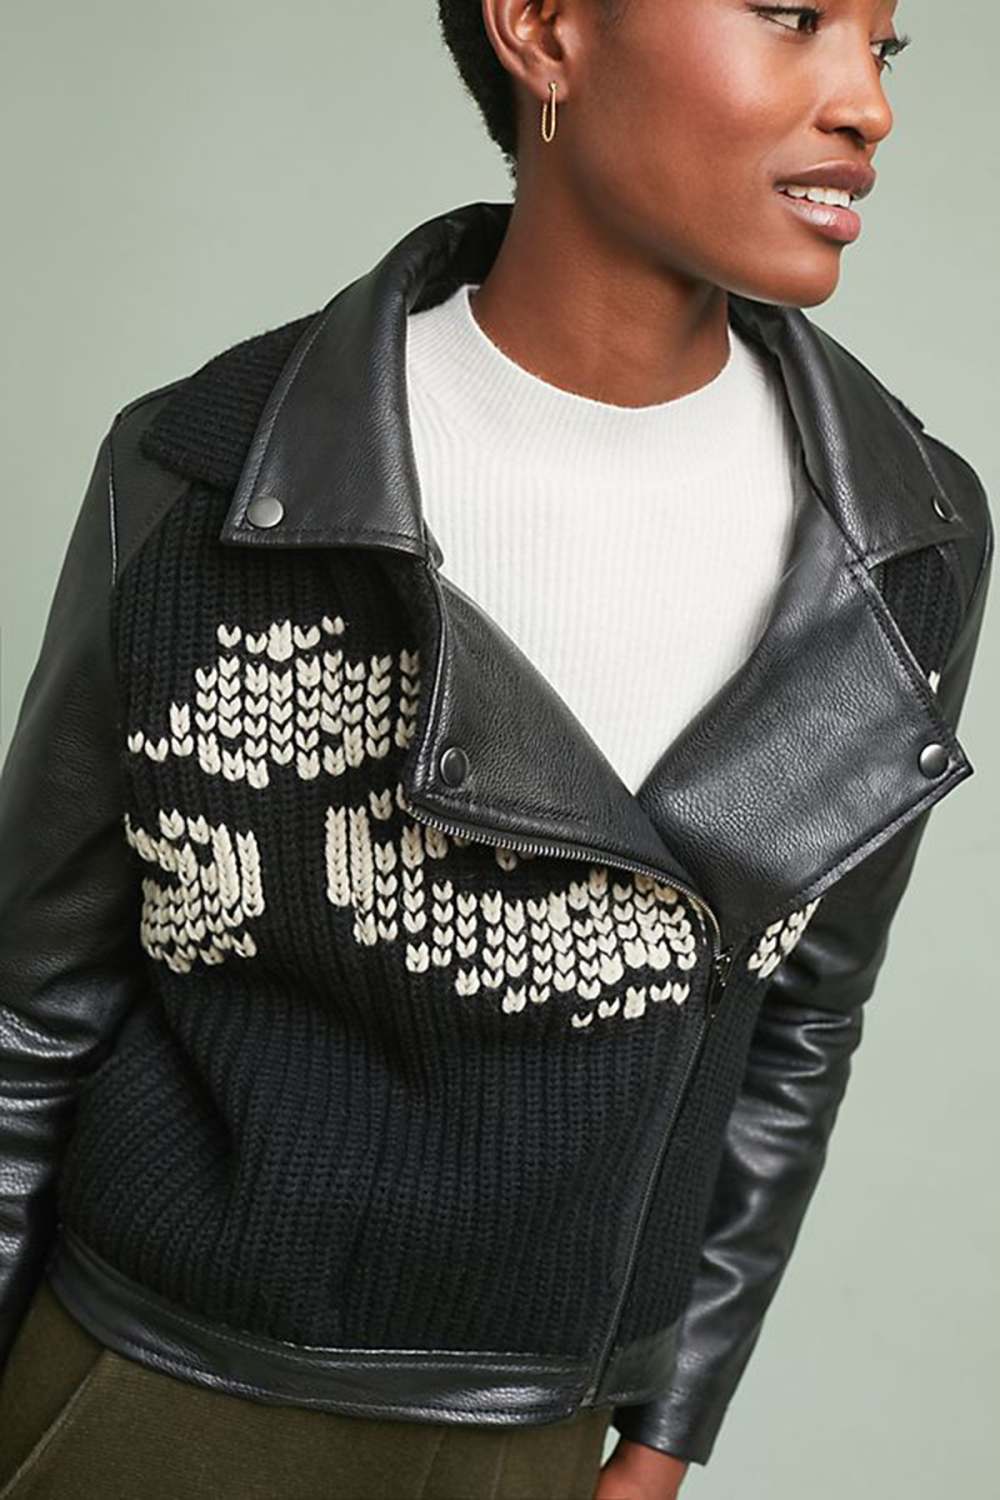 Sweater Moto Jacket Closeup